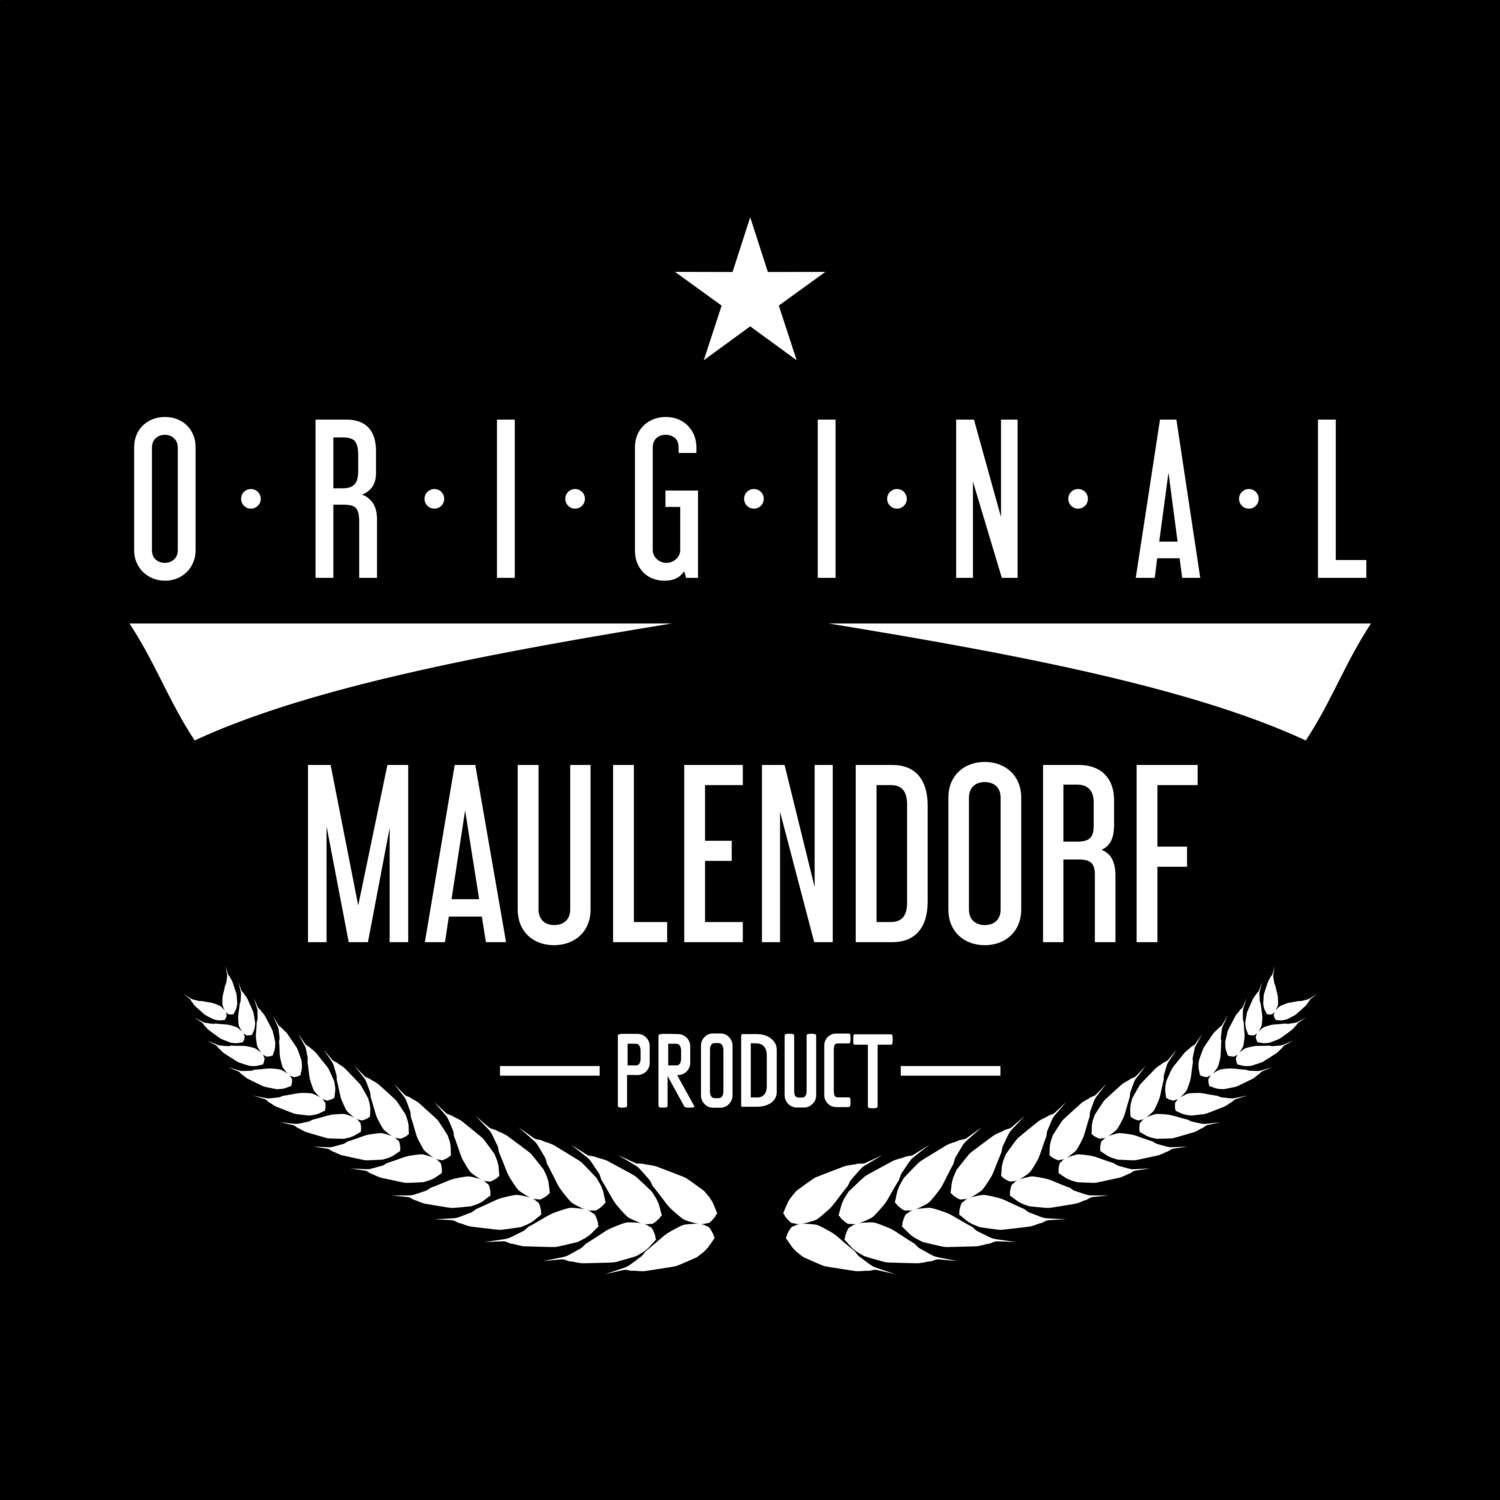 Maulendorf T-Shirt »Original Product«